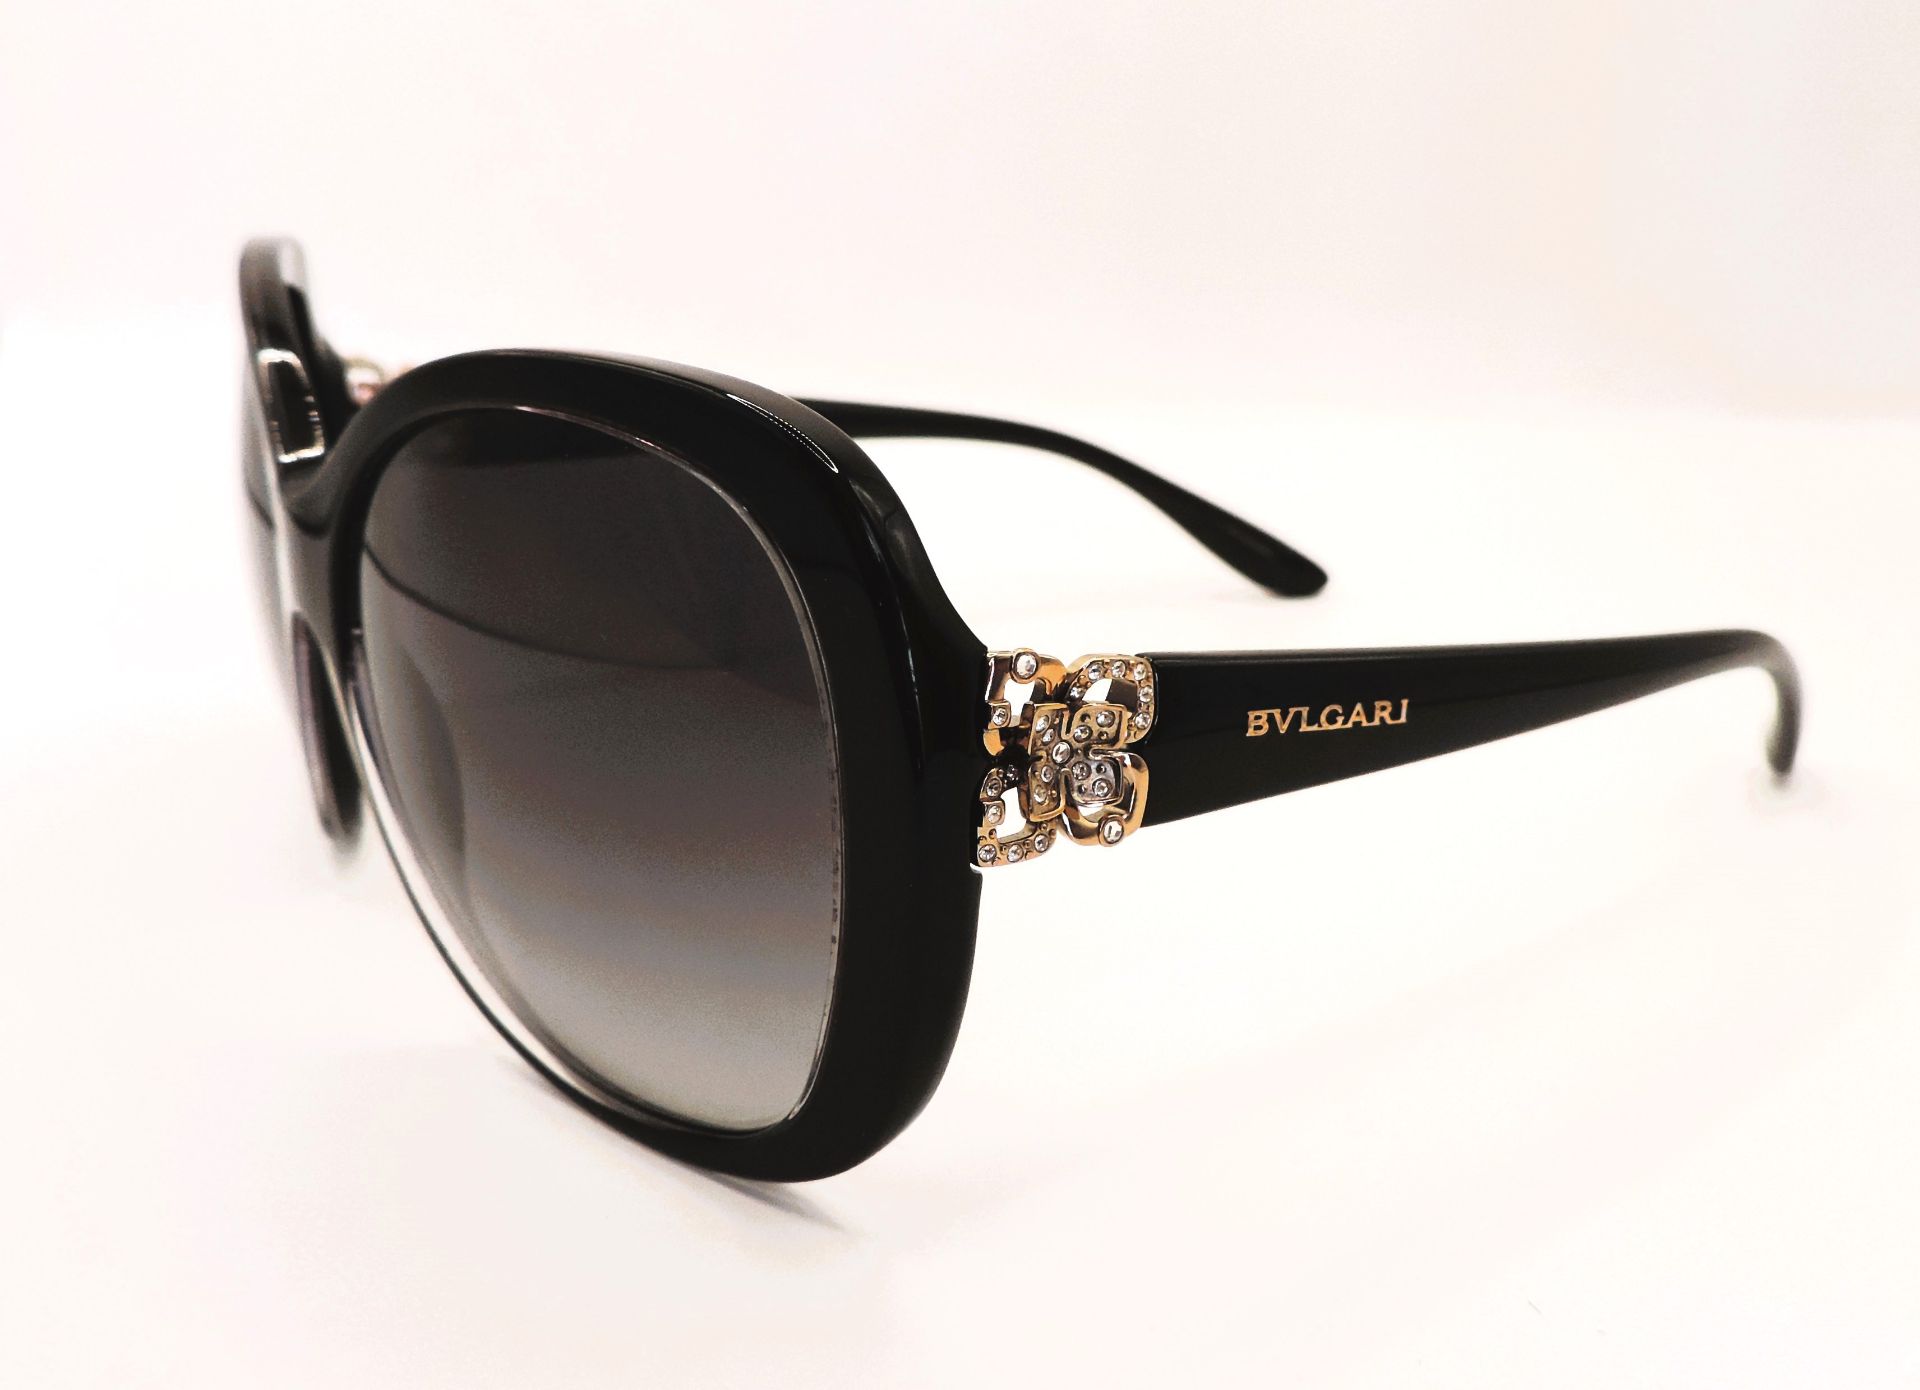 BVLGARI Black Sunglasses 8171-C Jewelled Hinged Detail New With Box & Certificate - Image 10 of 17